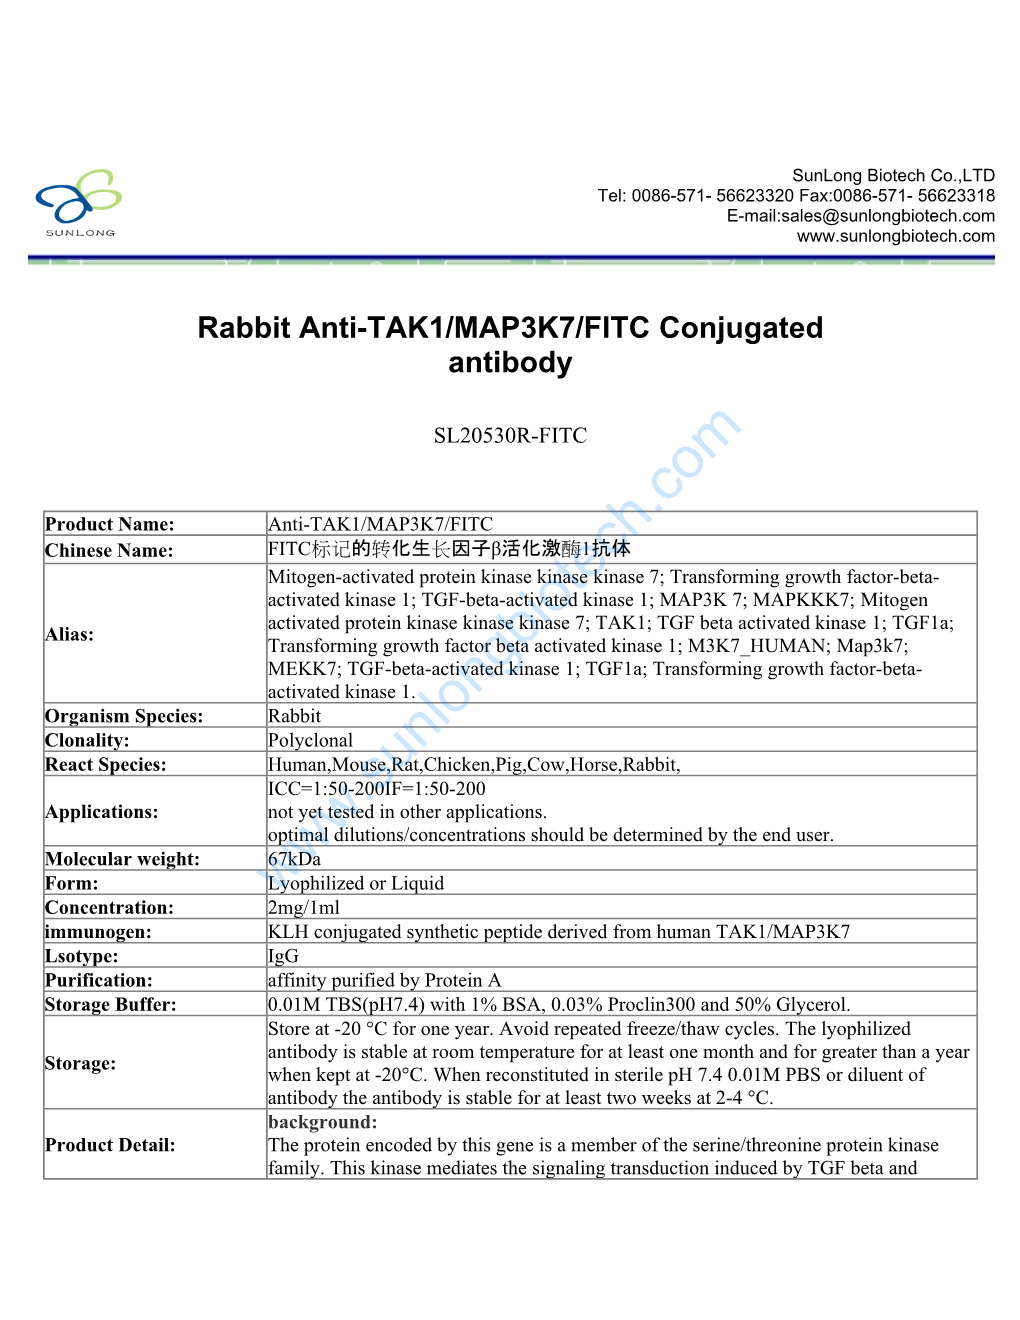 Rabbit Anti-TAK1/MAP3K7/FITC Conjugated Antibody-SL20530R